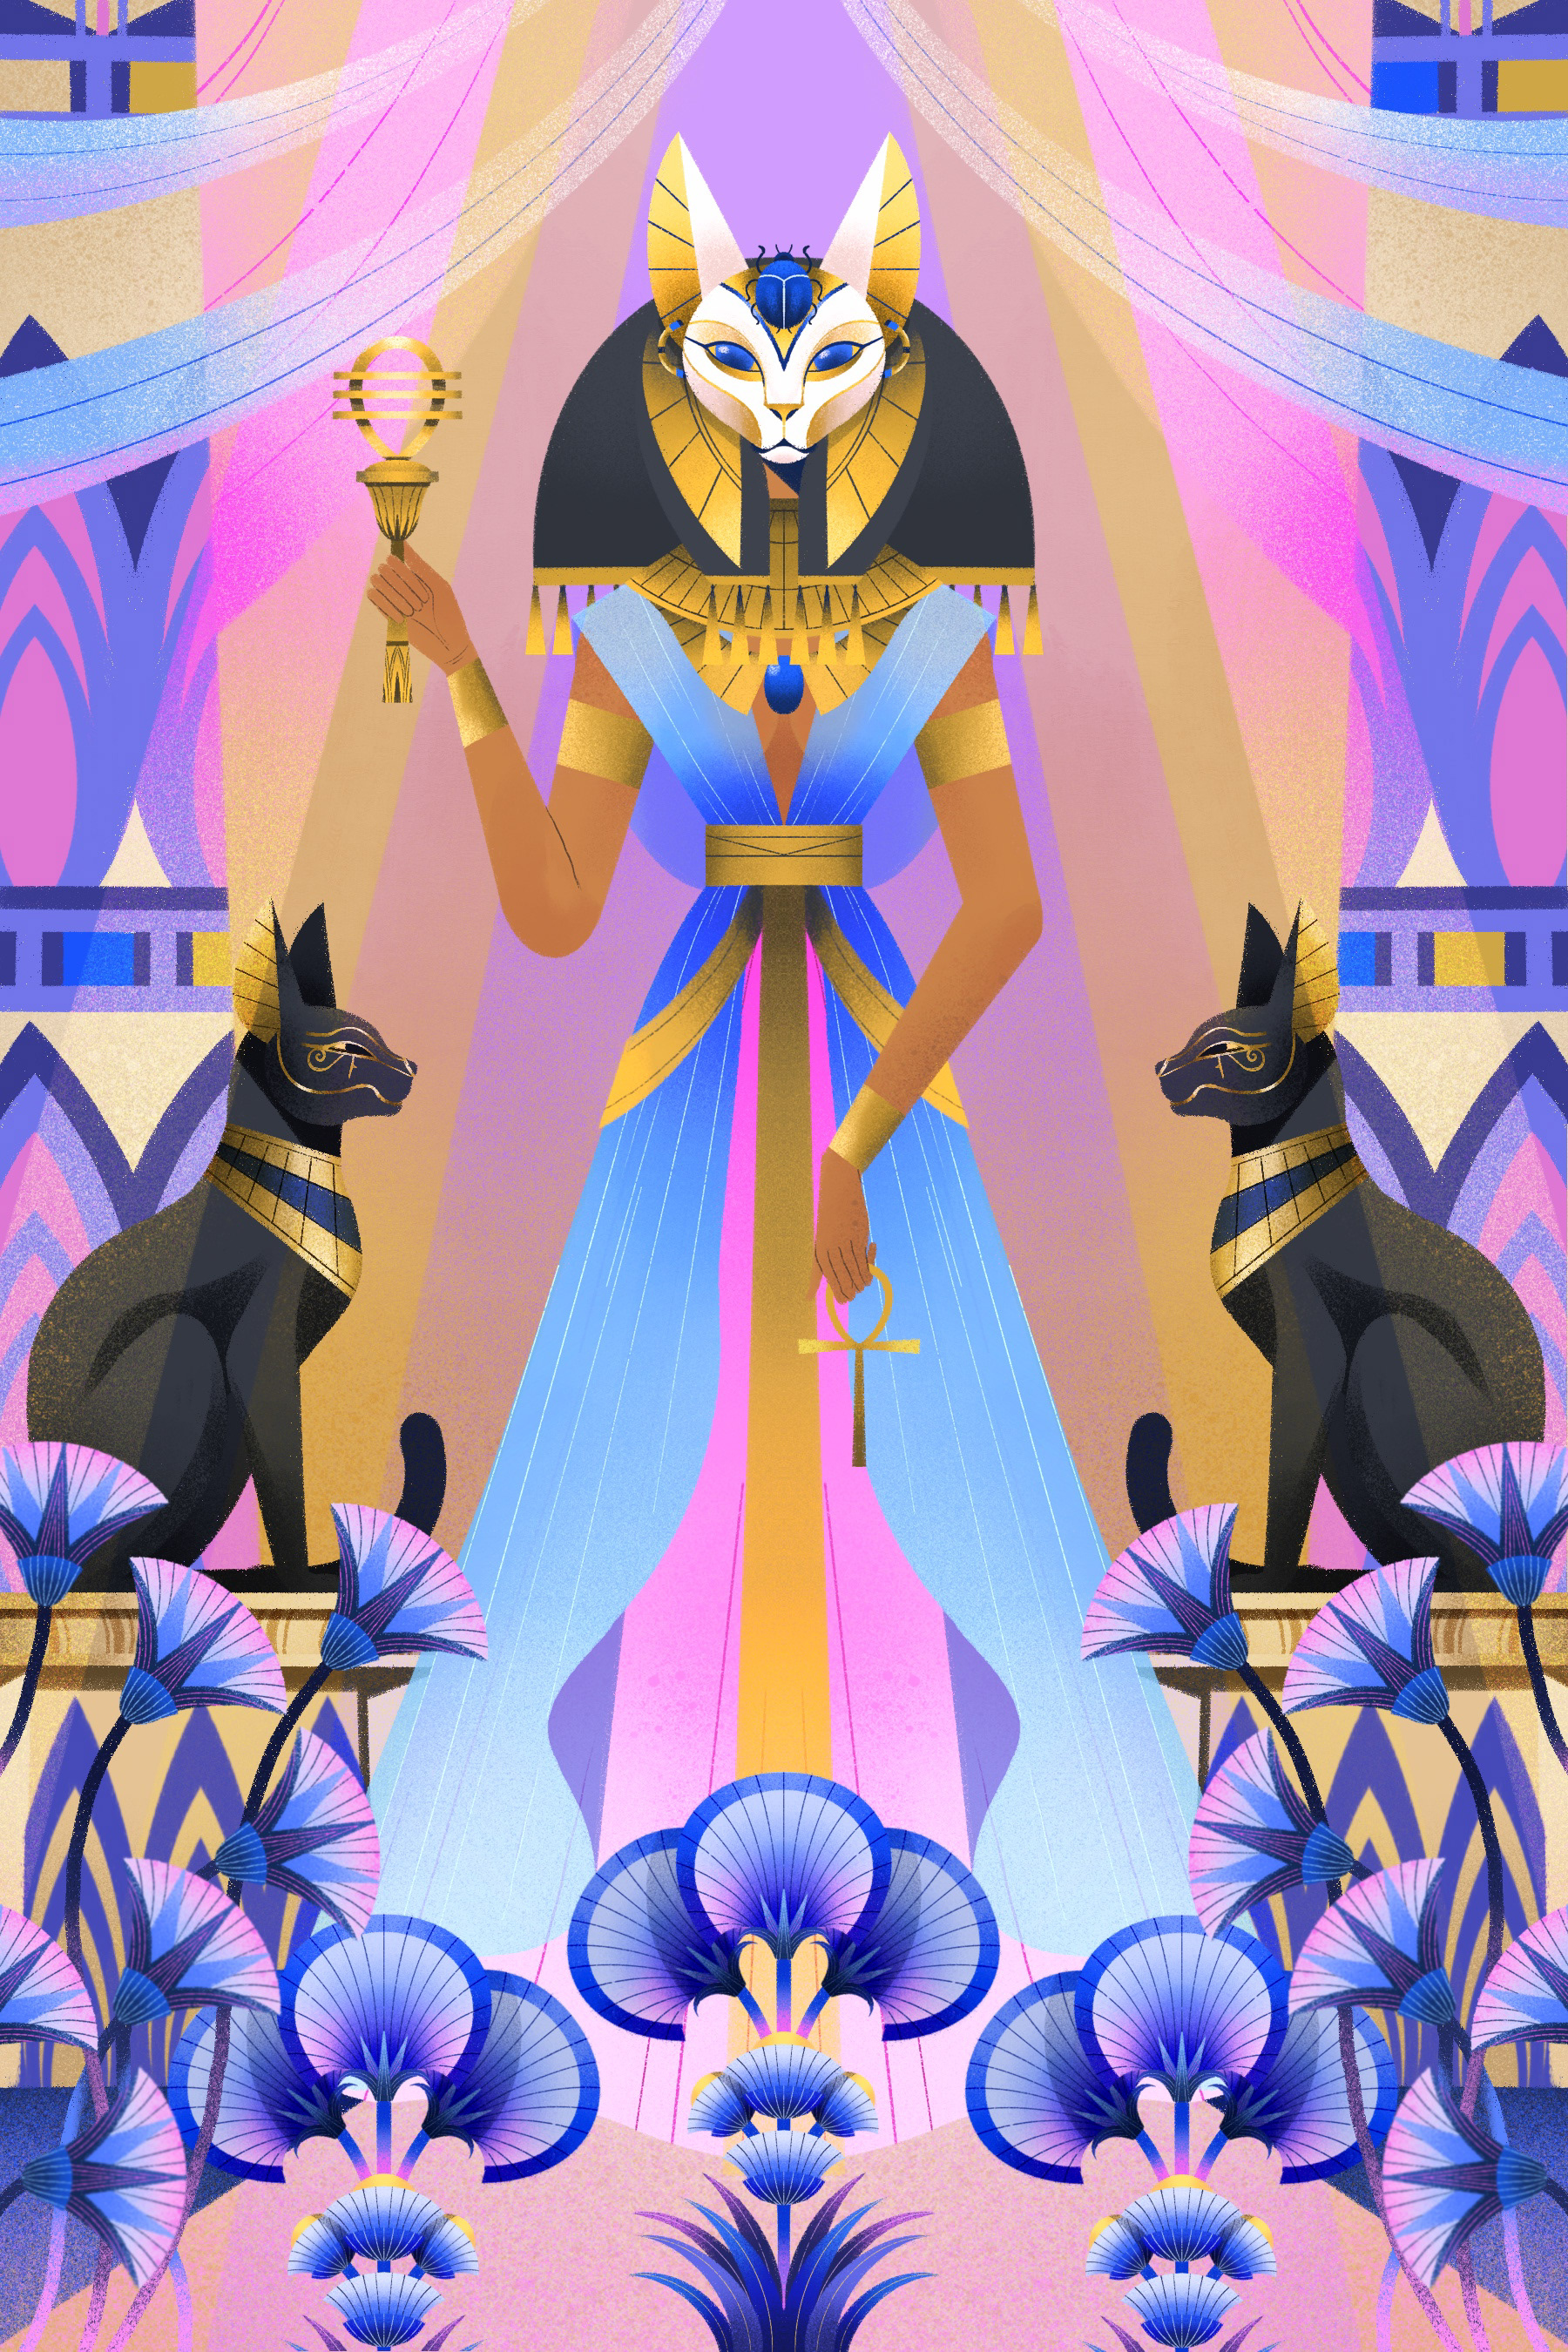 Meel T S Illustration Gods And Goddesses Of Ancient Egypt Egyptian Mythology